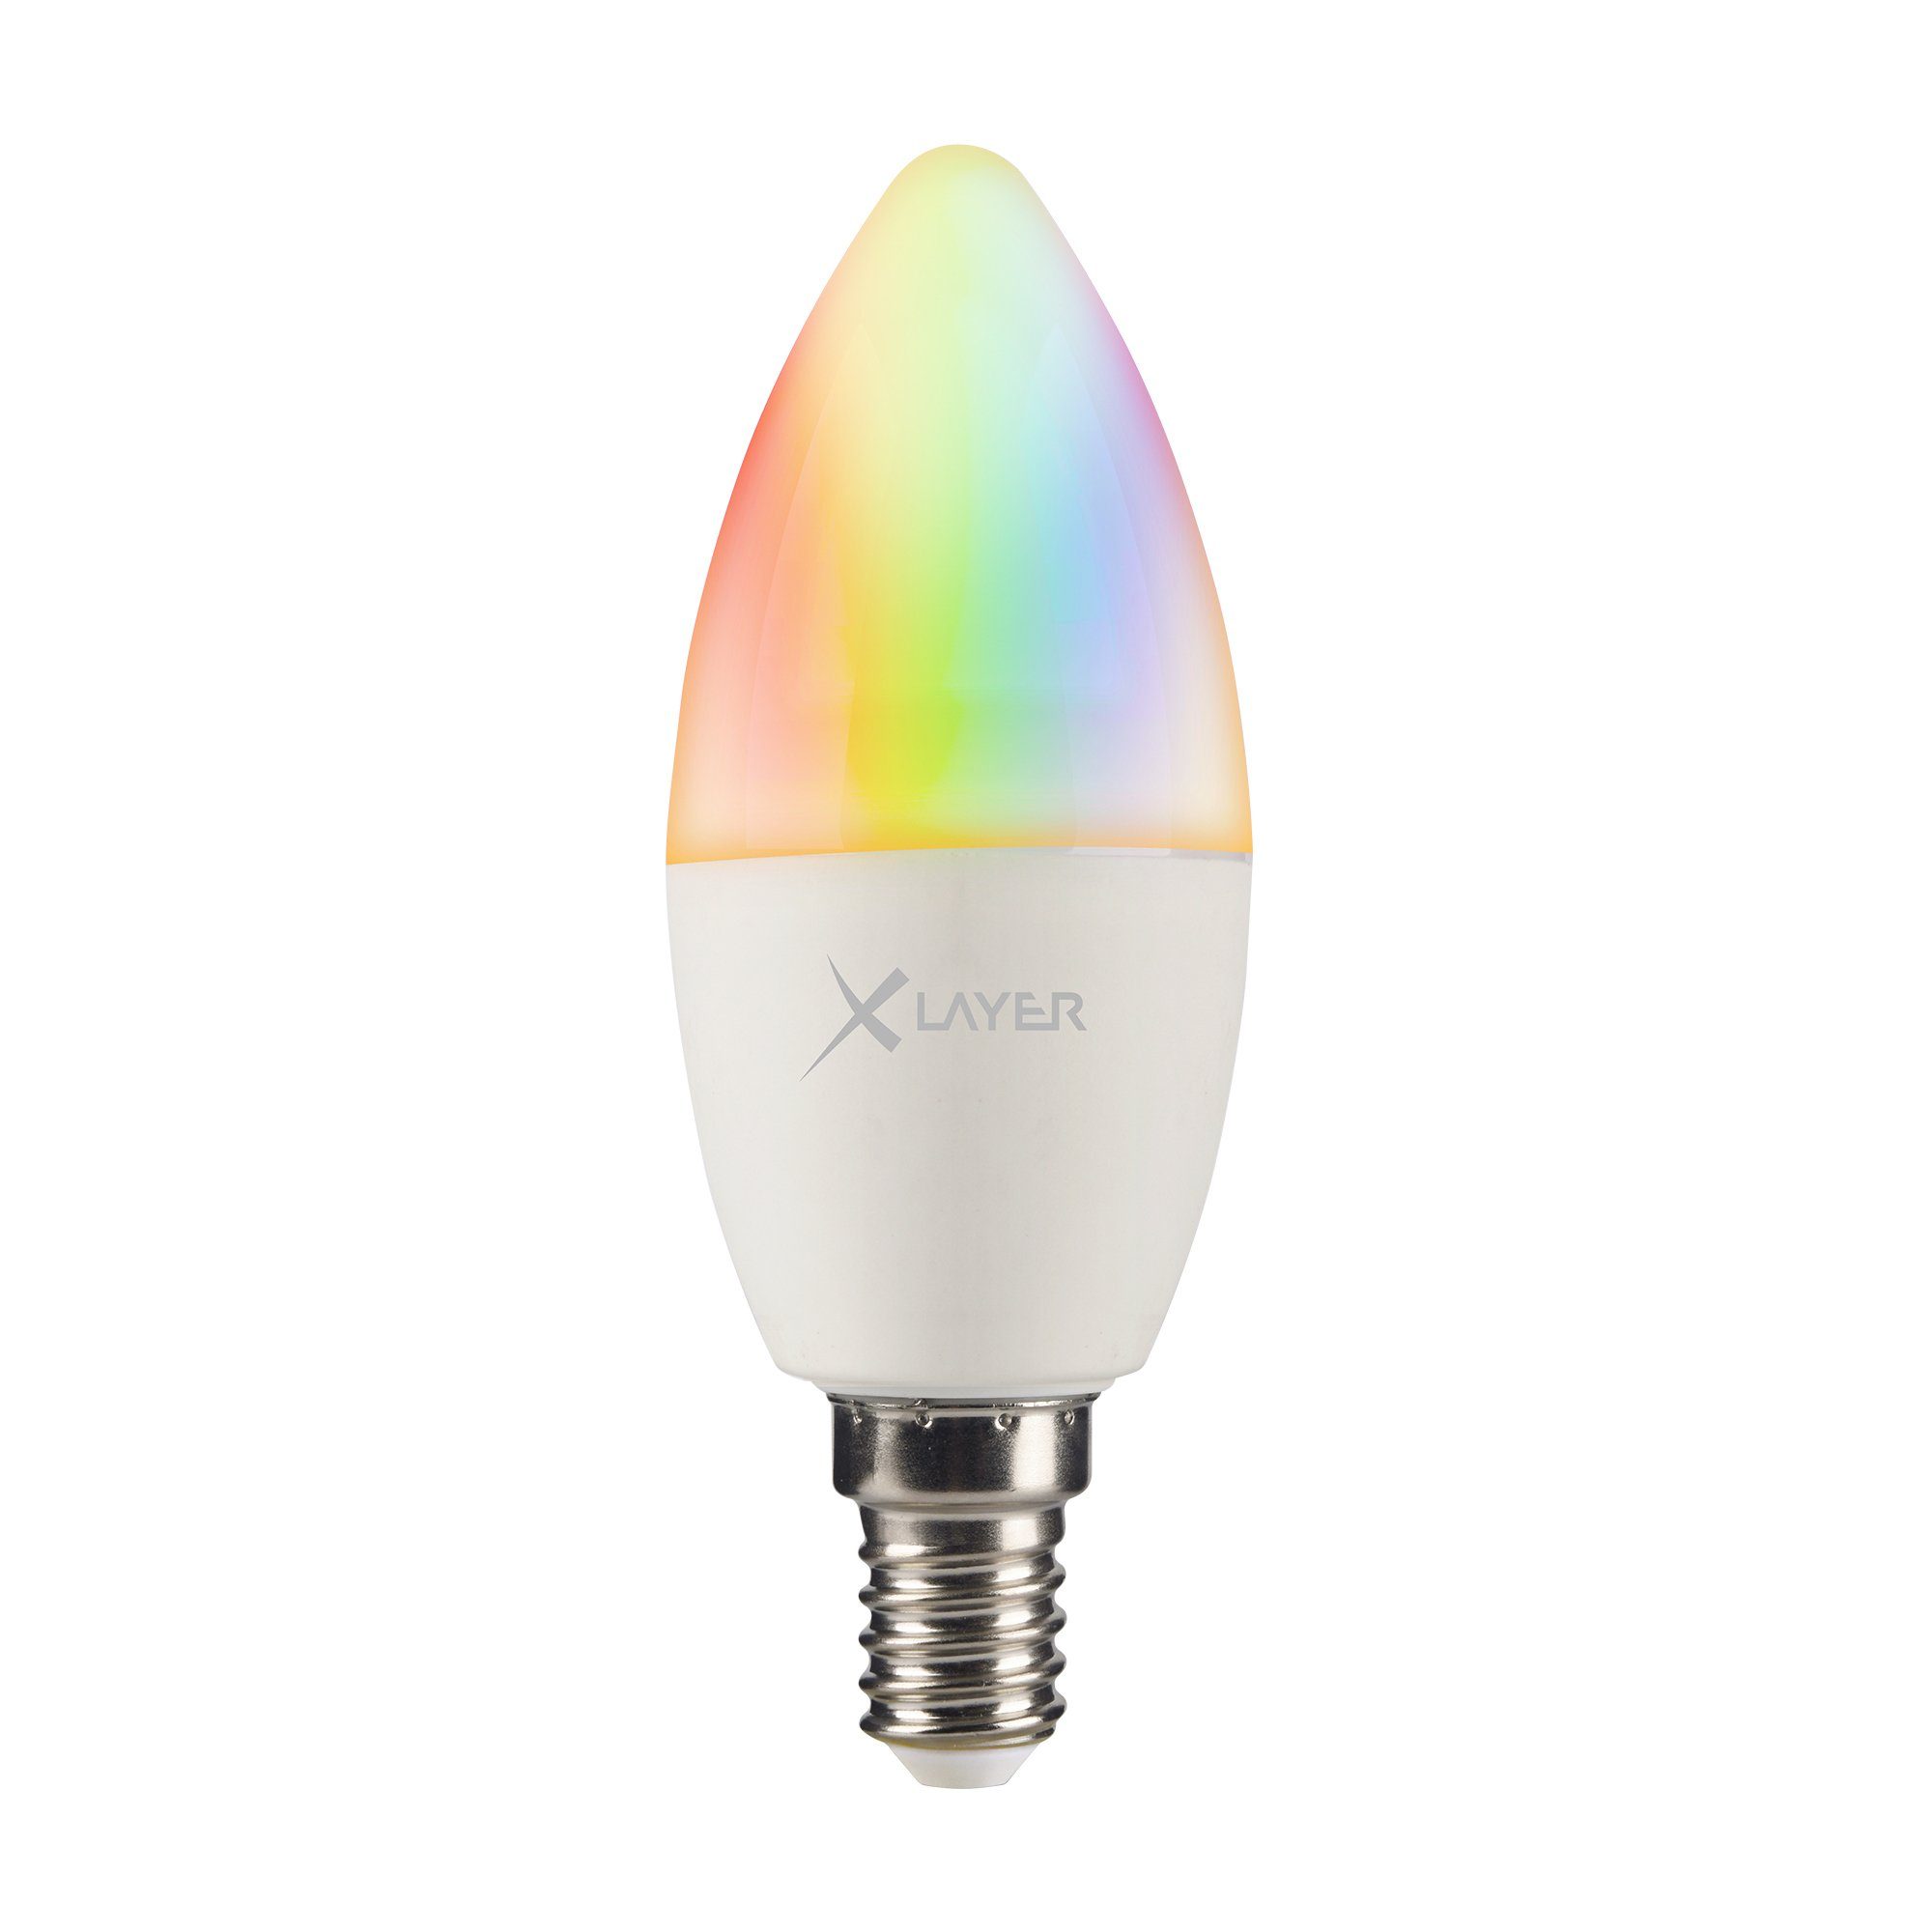 Warmweiß, LED-Leuchte Echo Smart WLAN E14 LED Lampe XLAYER Mehrfarbig 4.5W Smarte Dimmbar